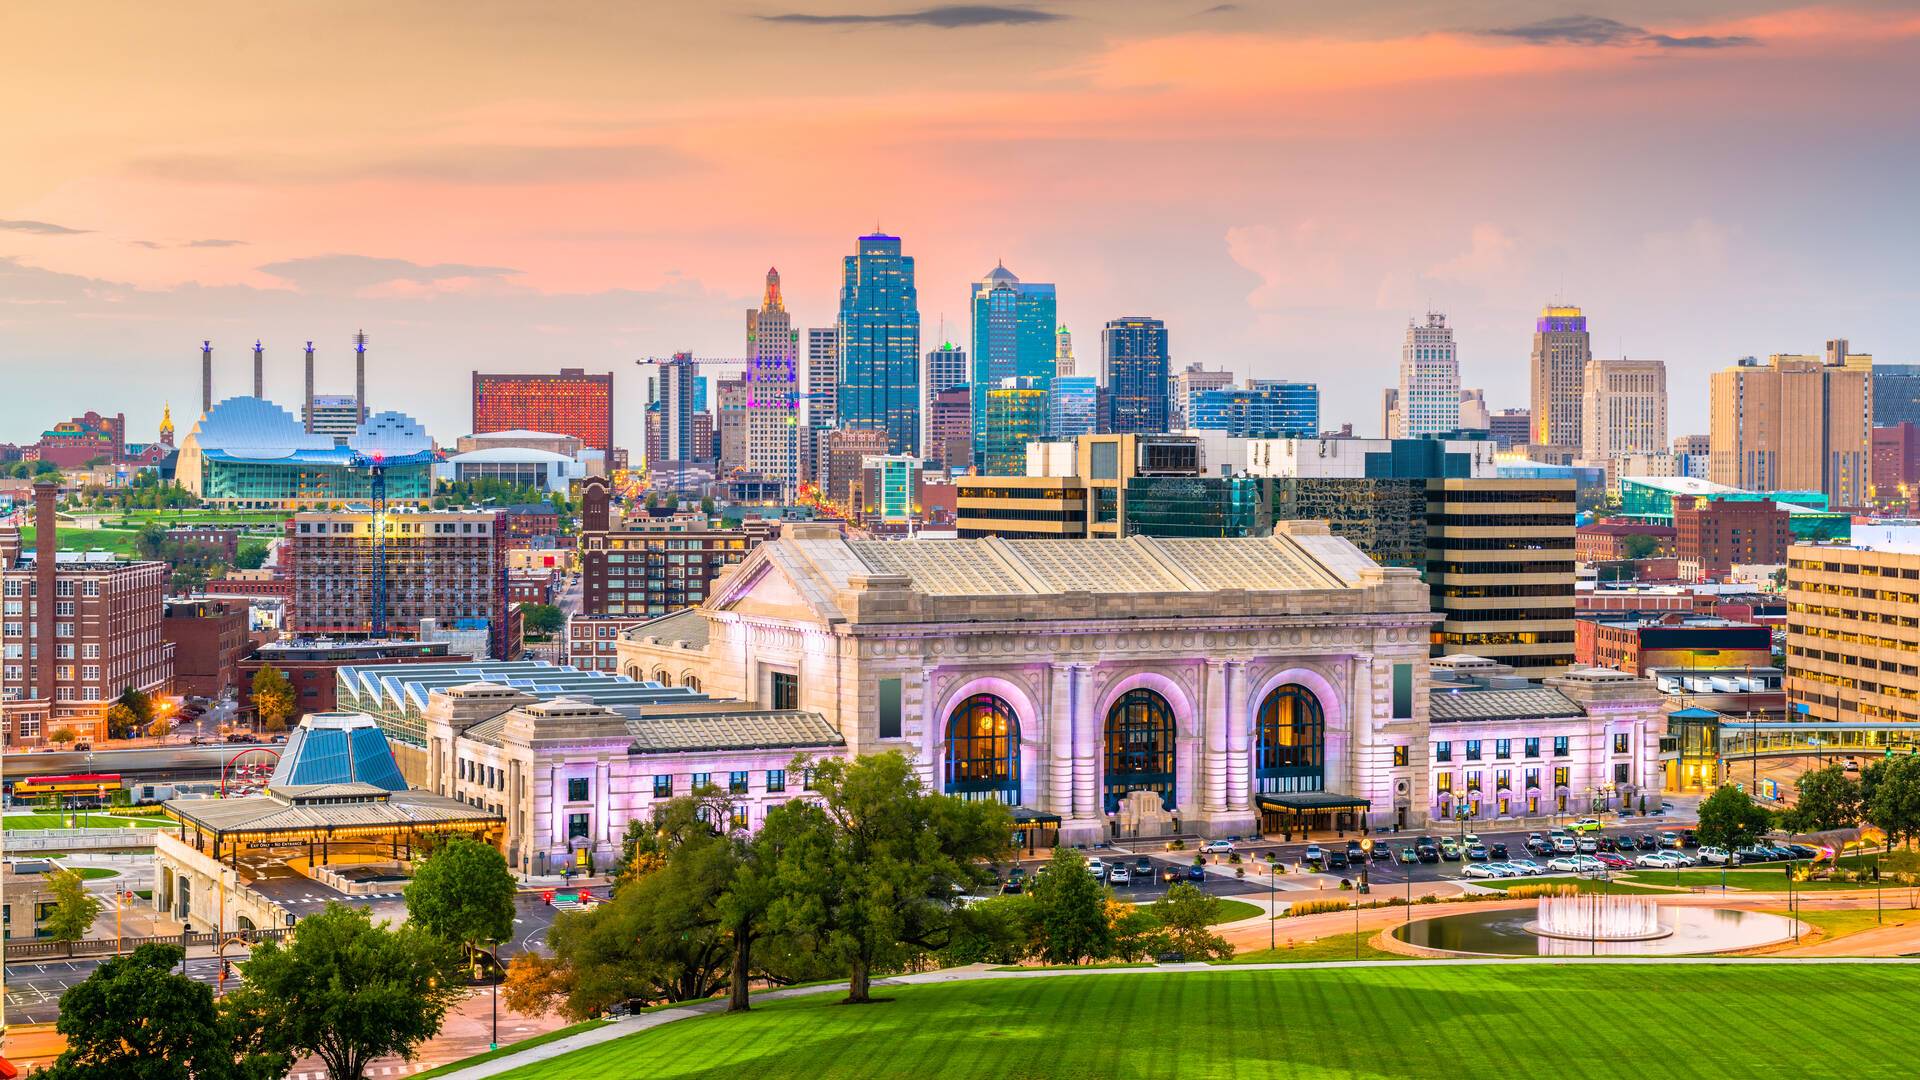 Kansas City Reisen und Billigflug – USA – Hotels und Flug nach Kansas City